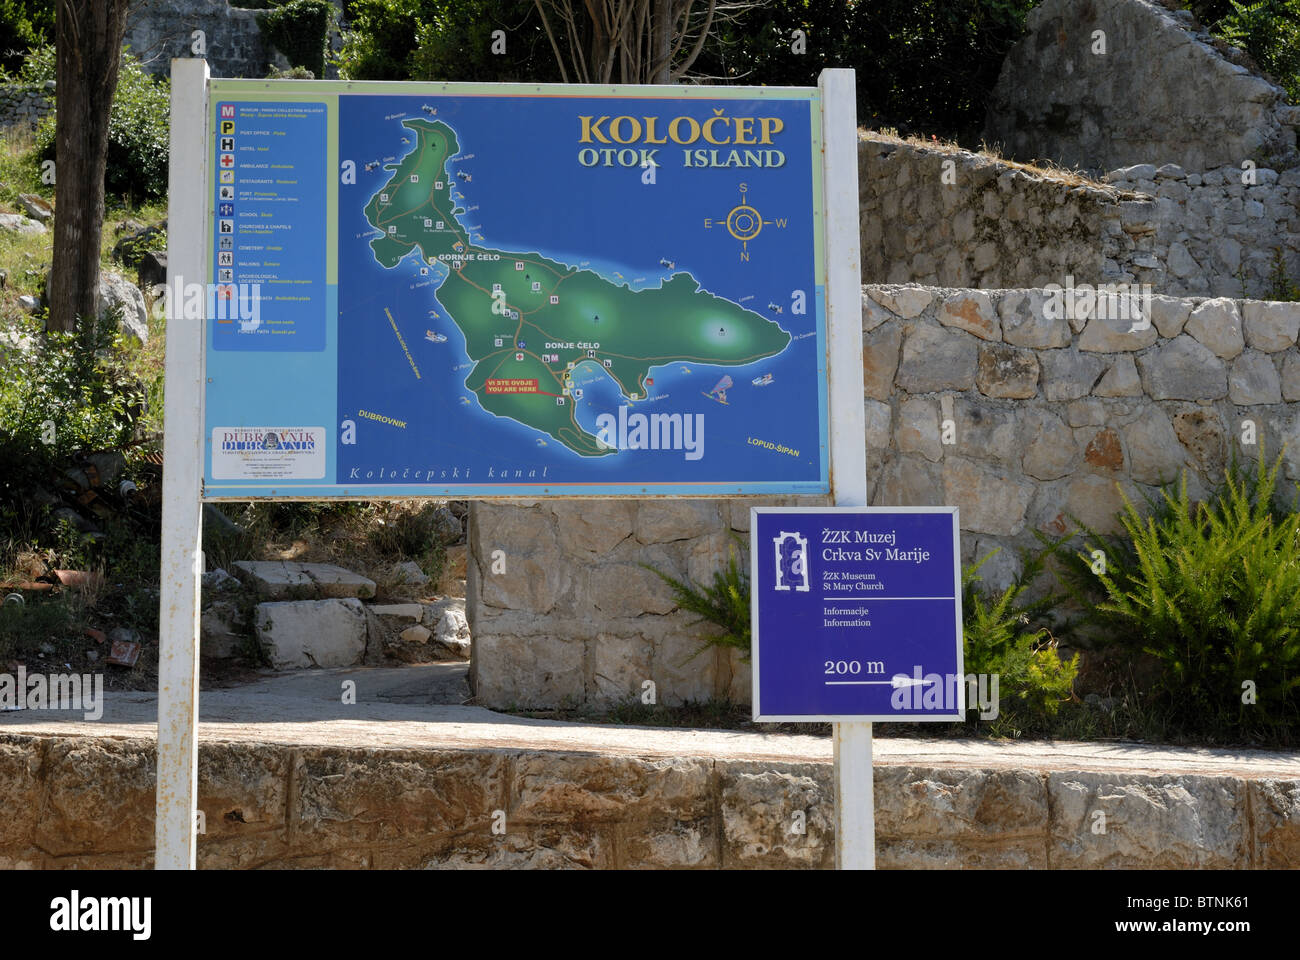 A visitor information board near the harbour of the Donje Celo Village on the Kolocep Island, Elafiti Islands. The Kolocep ... Stock Photo